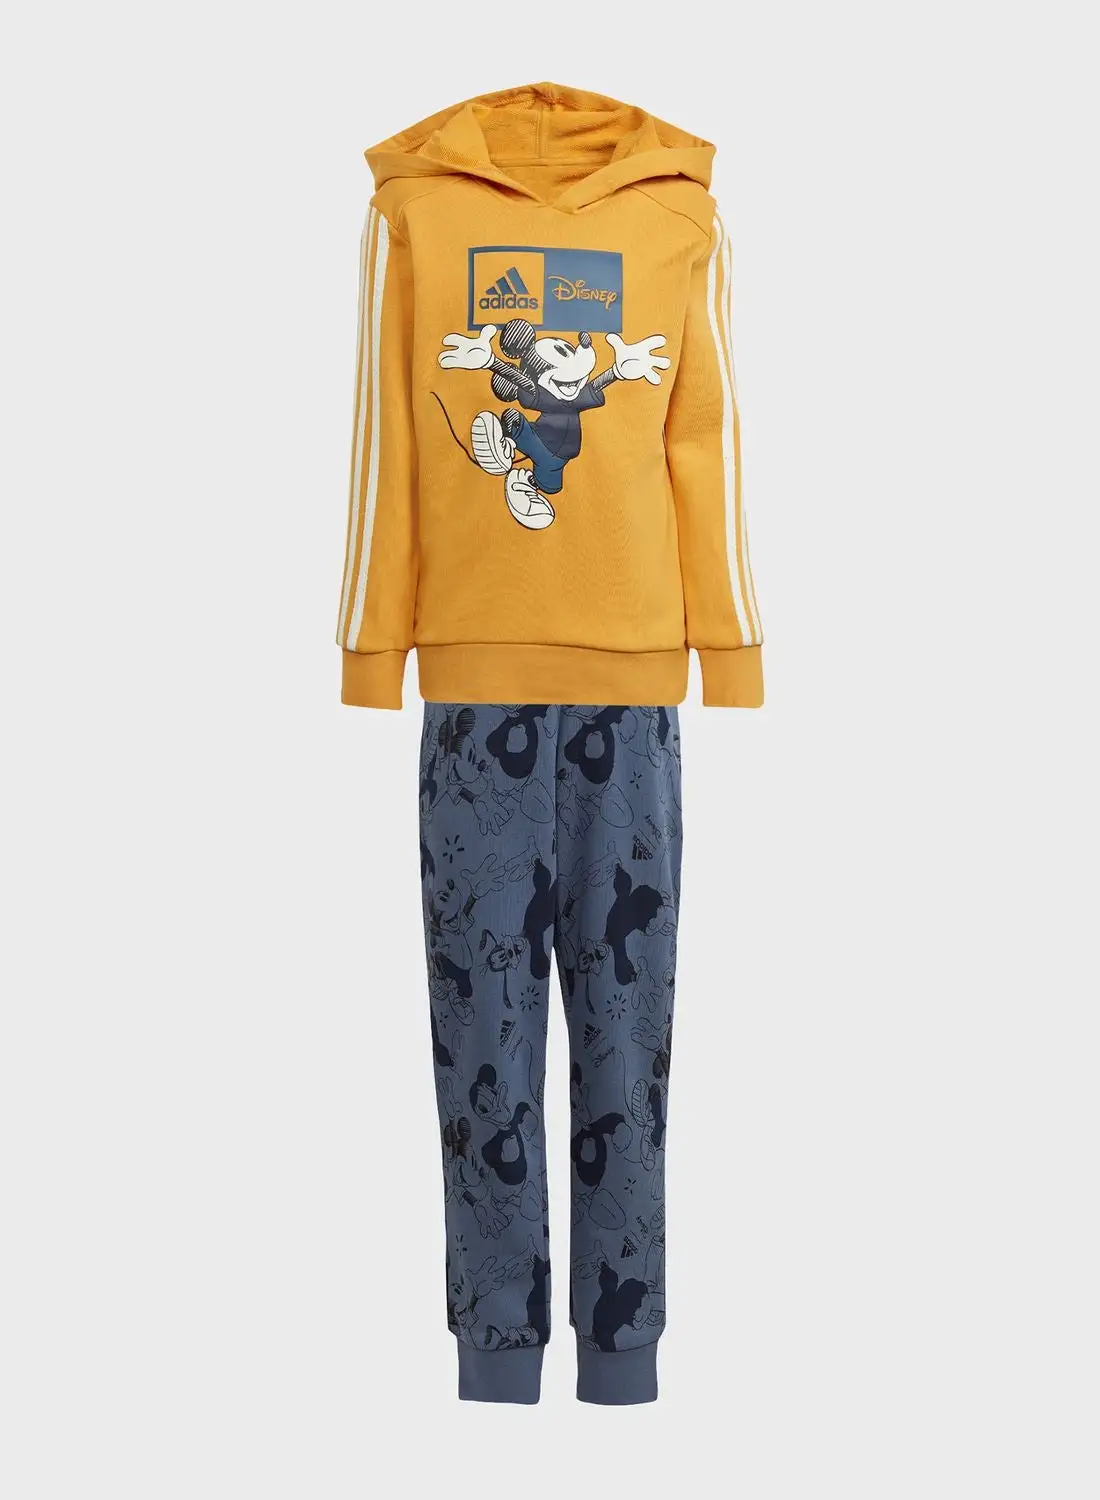 Adidas Little Kids Disney Mickey Mouse Jogger and Sweatshirt